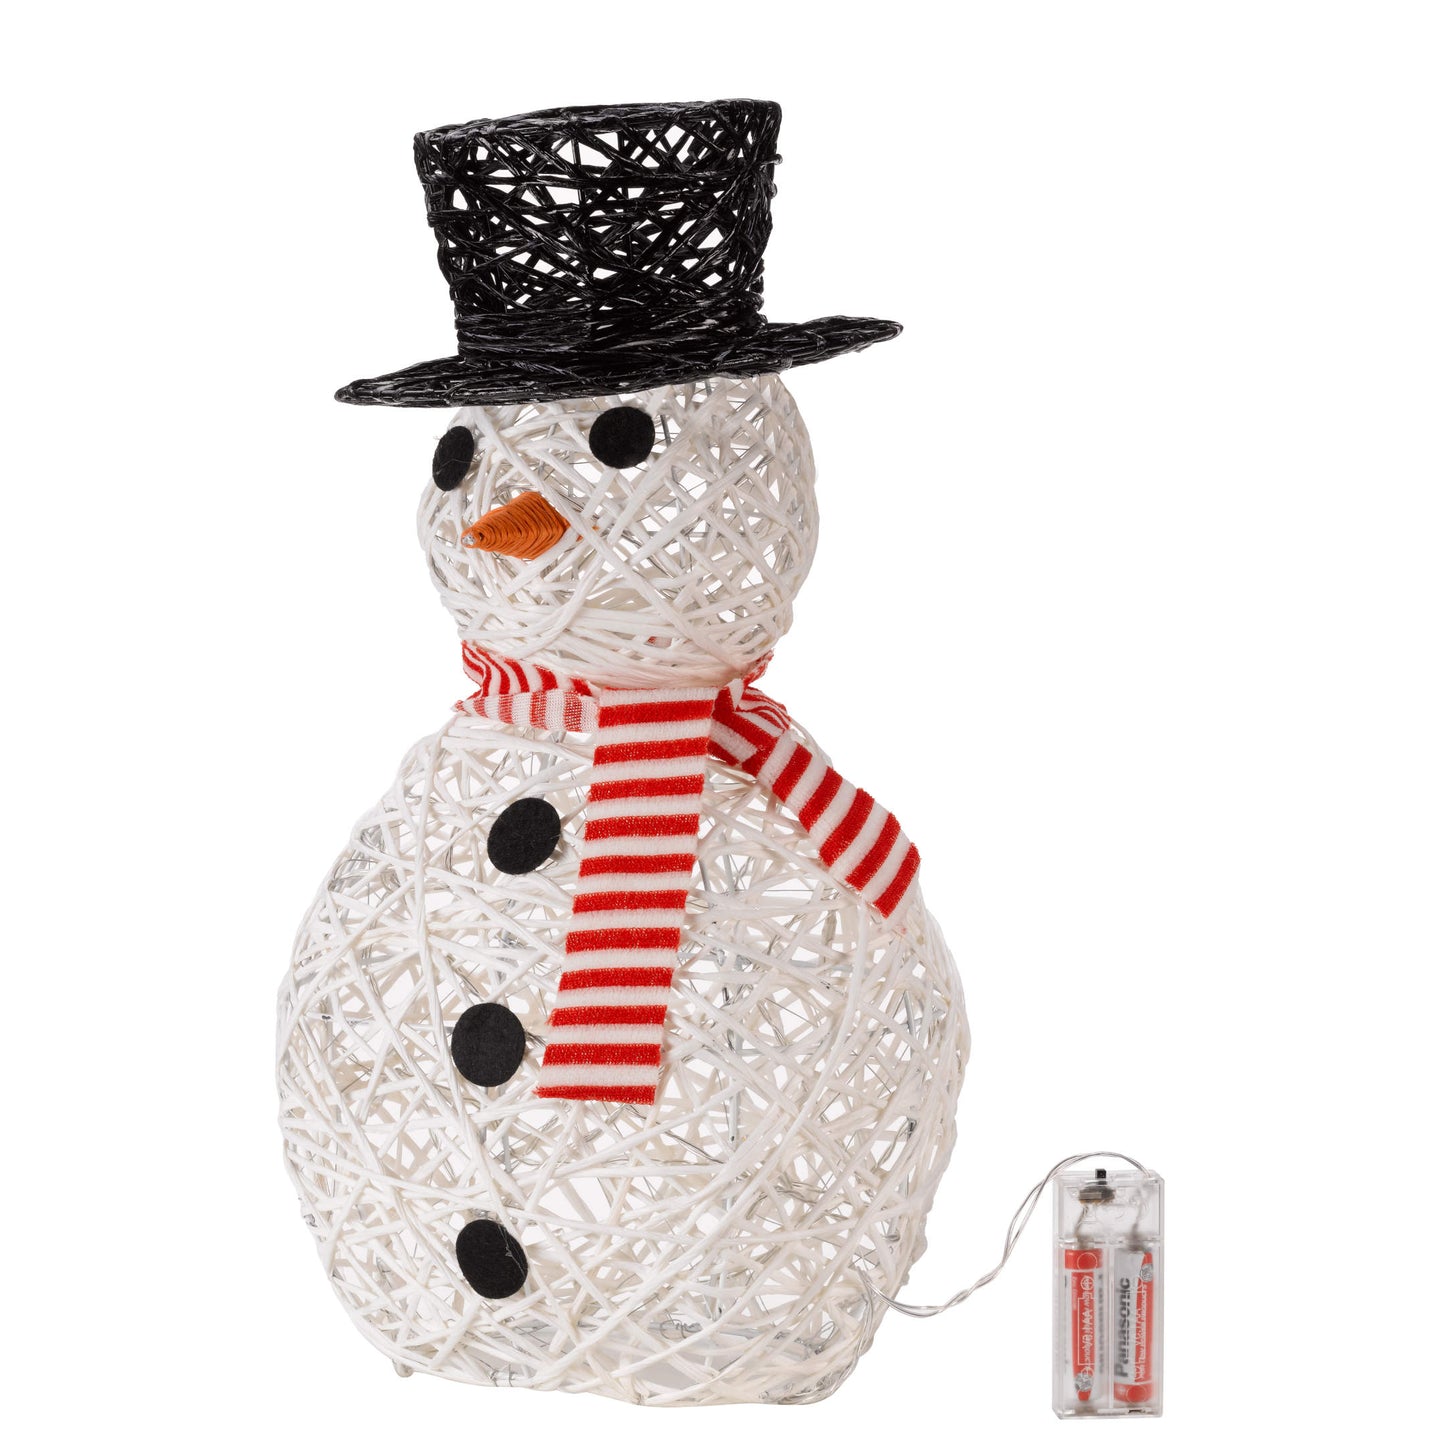 Products Vianočná figúrka s LED osvetlením ⸱ Sparkly Snowman